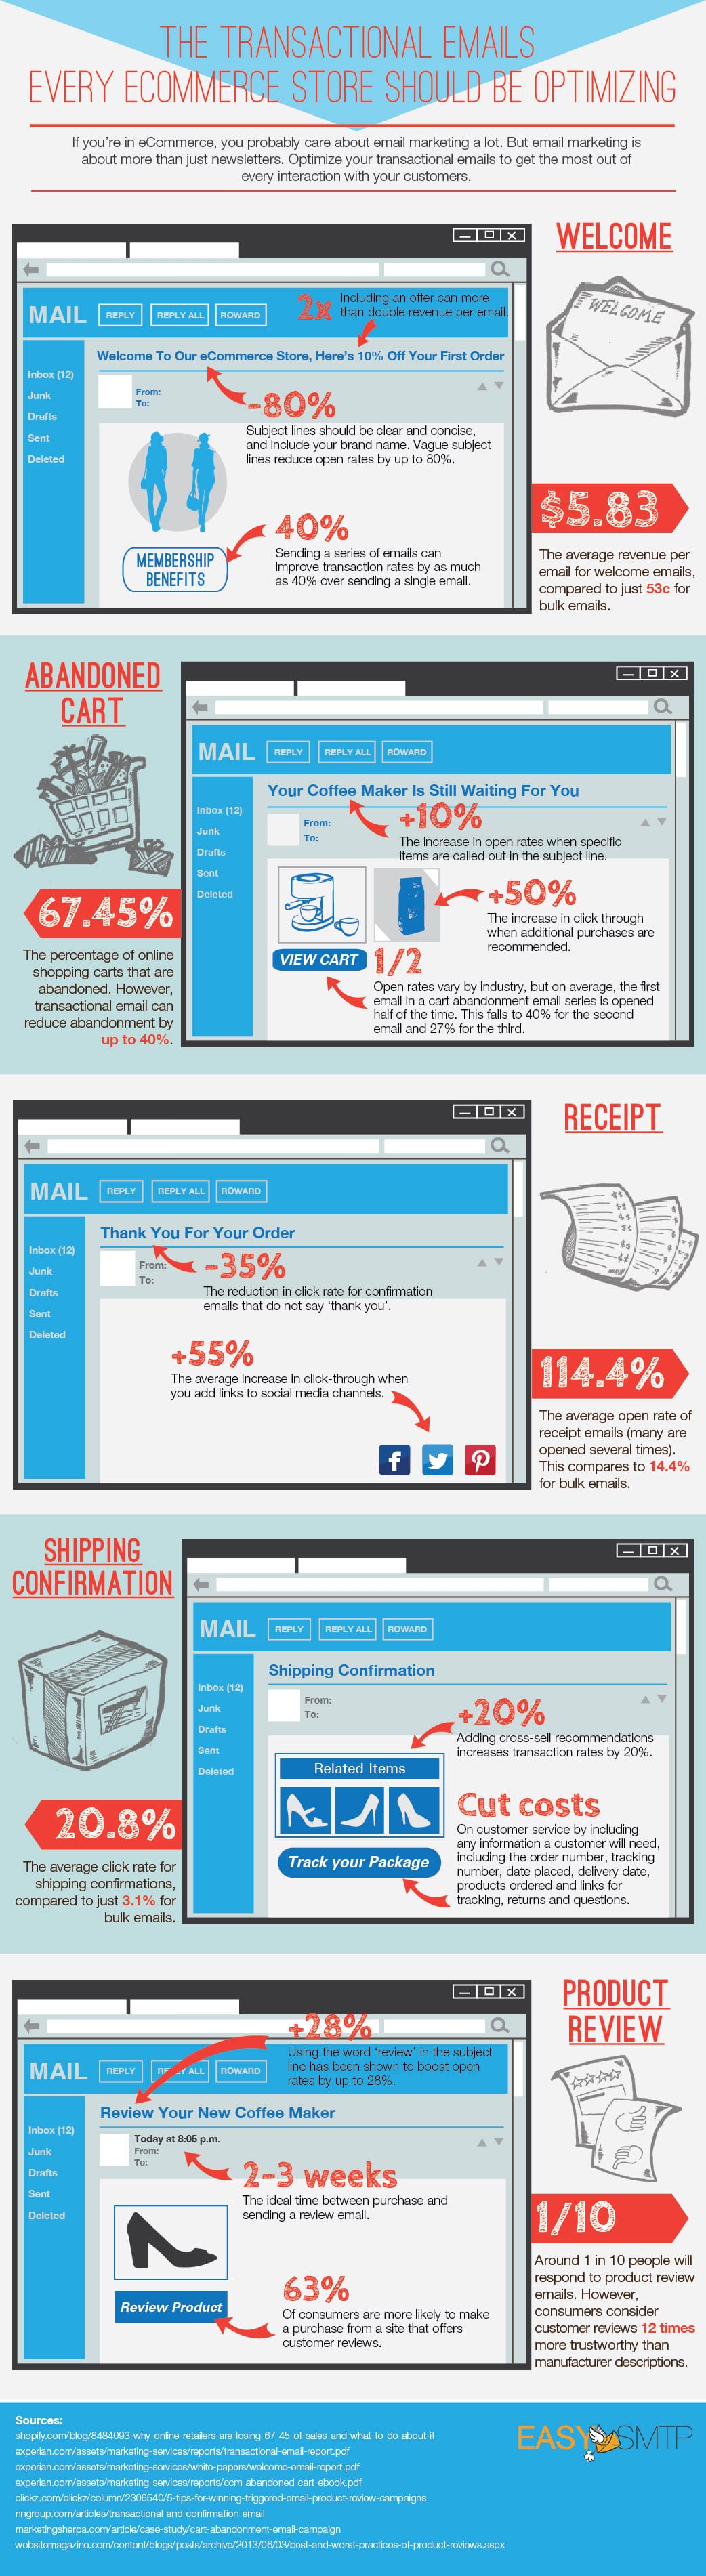 ... transaction emails [Infographic] - Smart Insights Digital Marketing